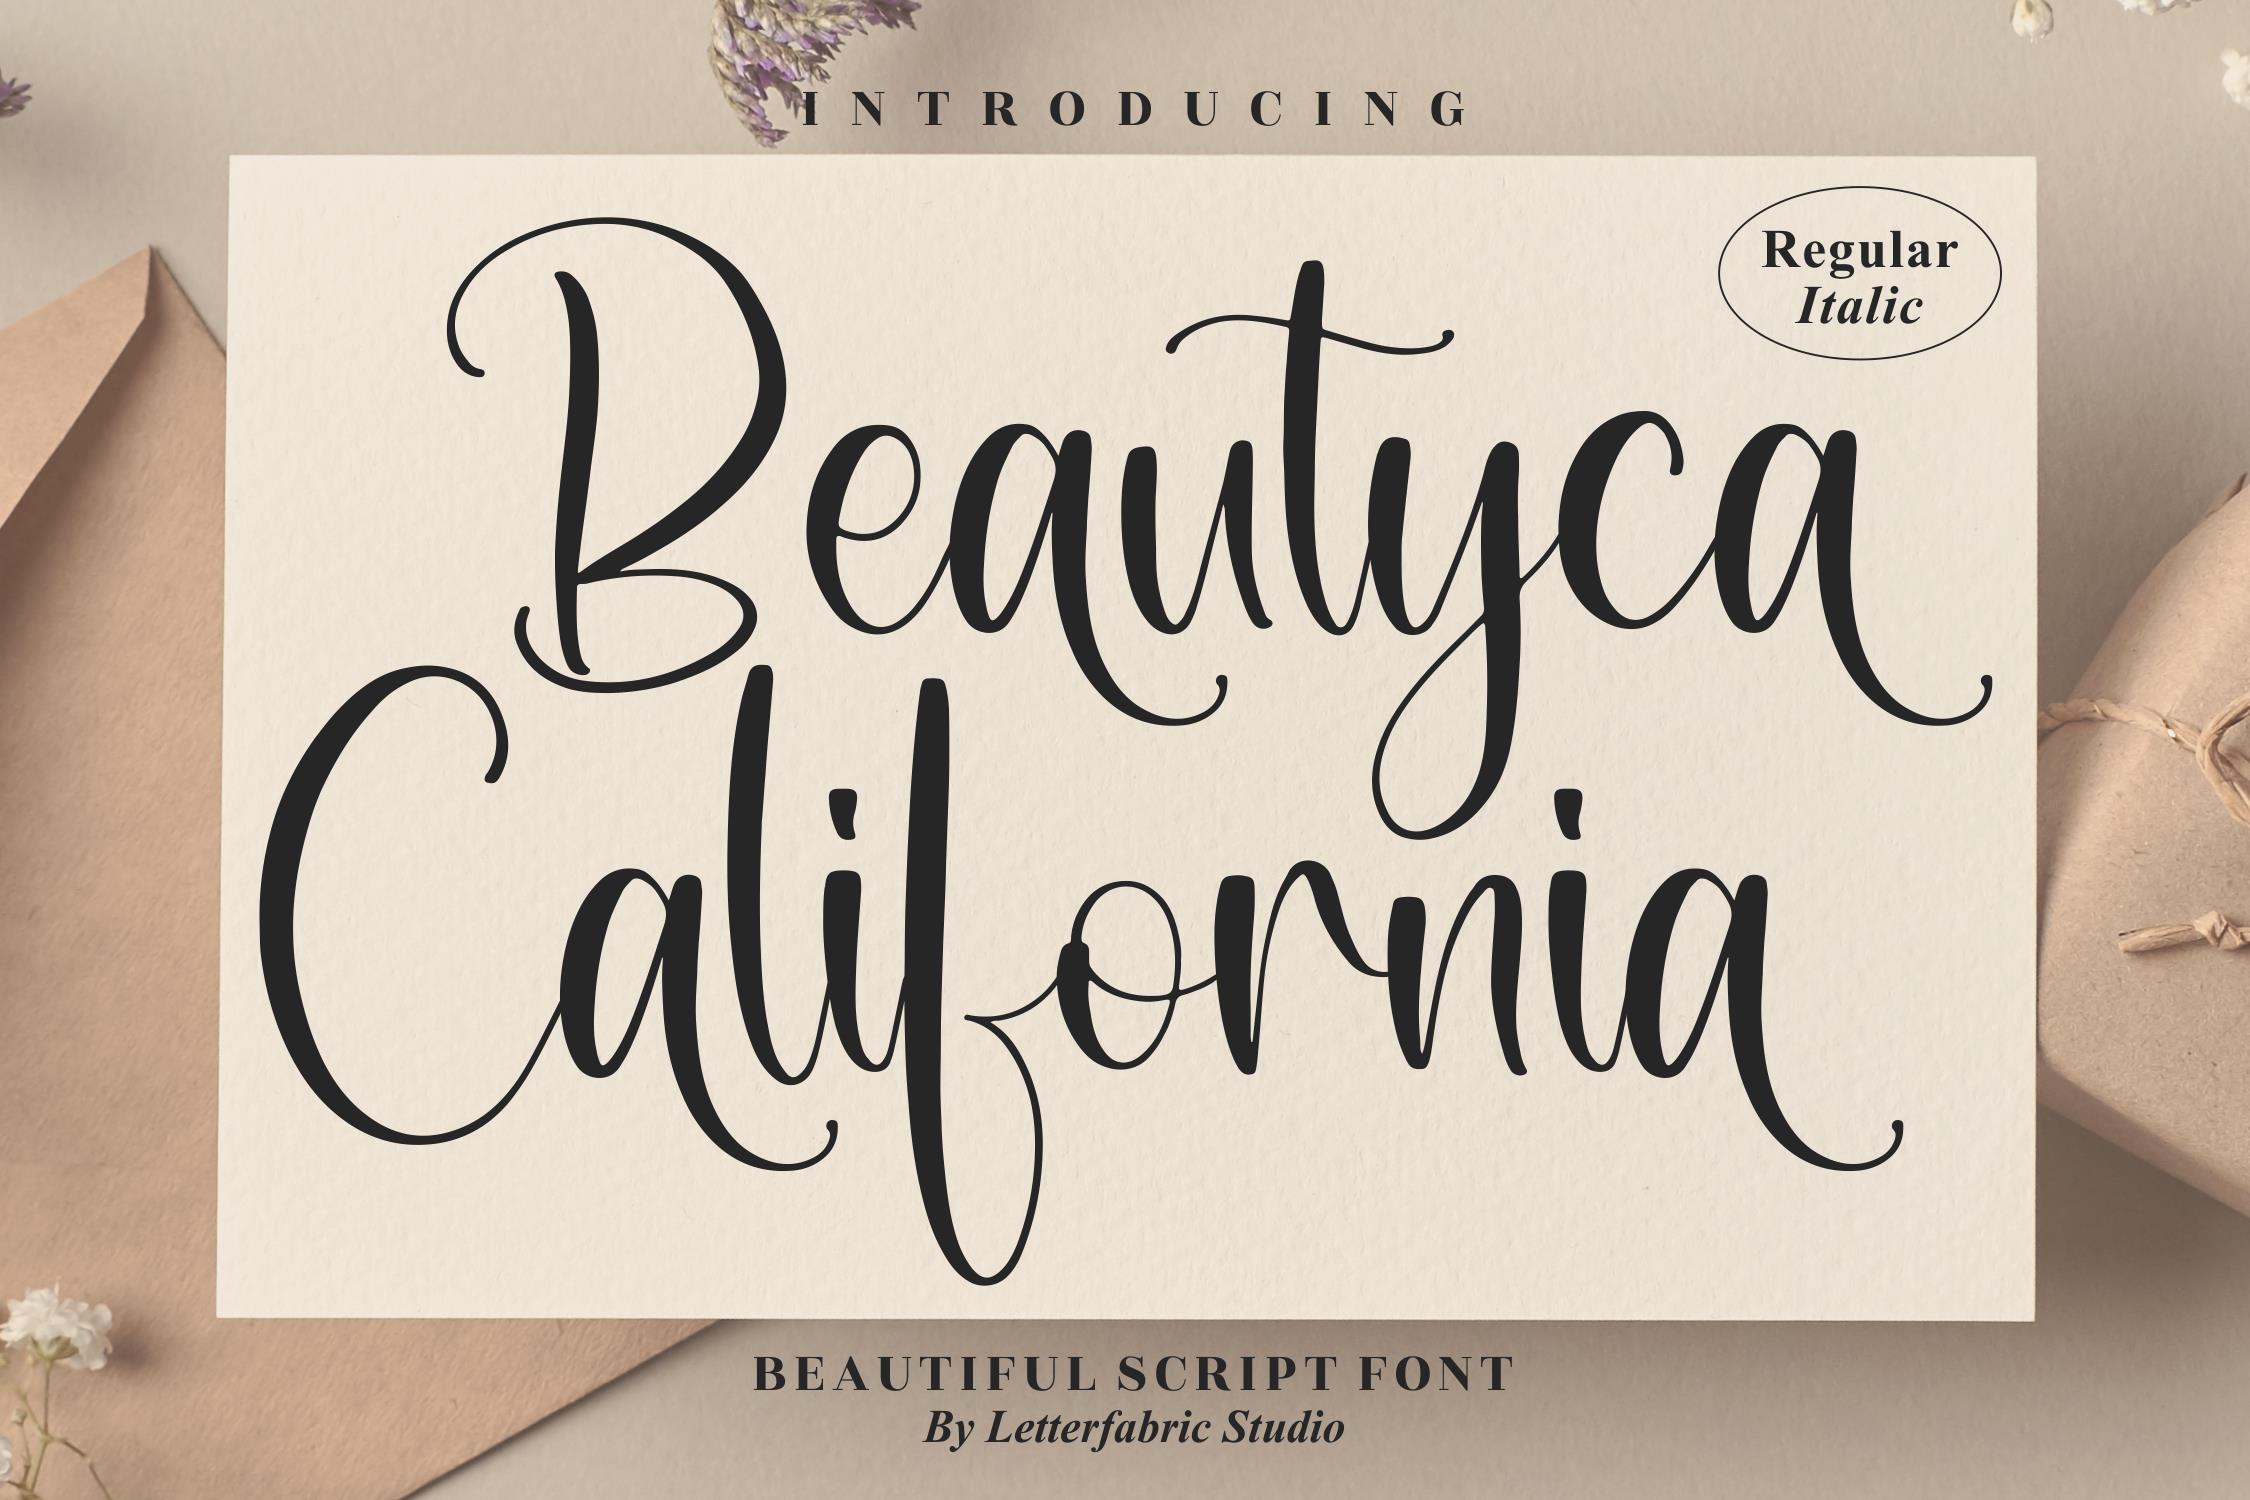 Beautyca California Script Font